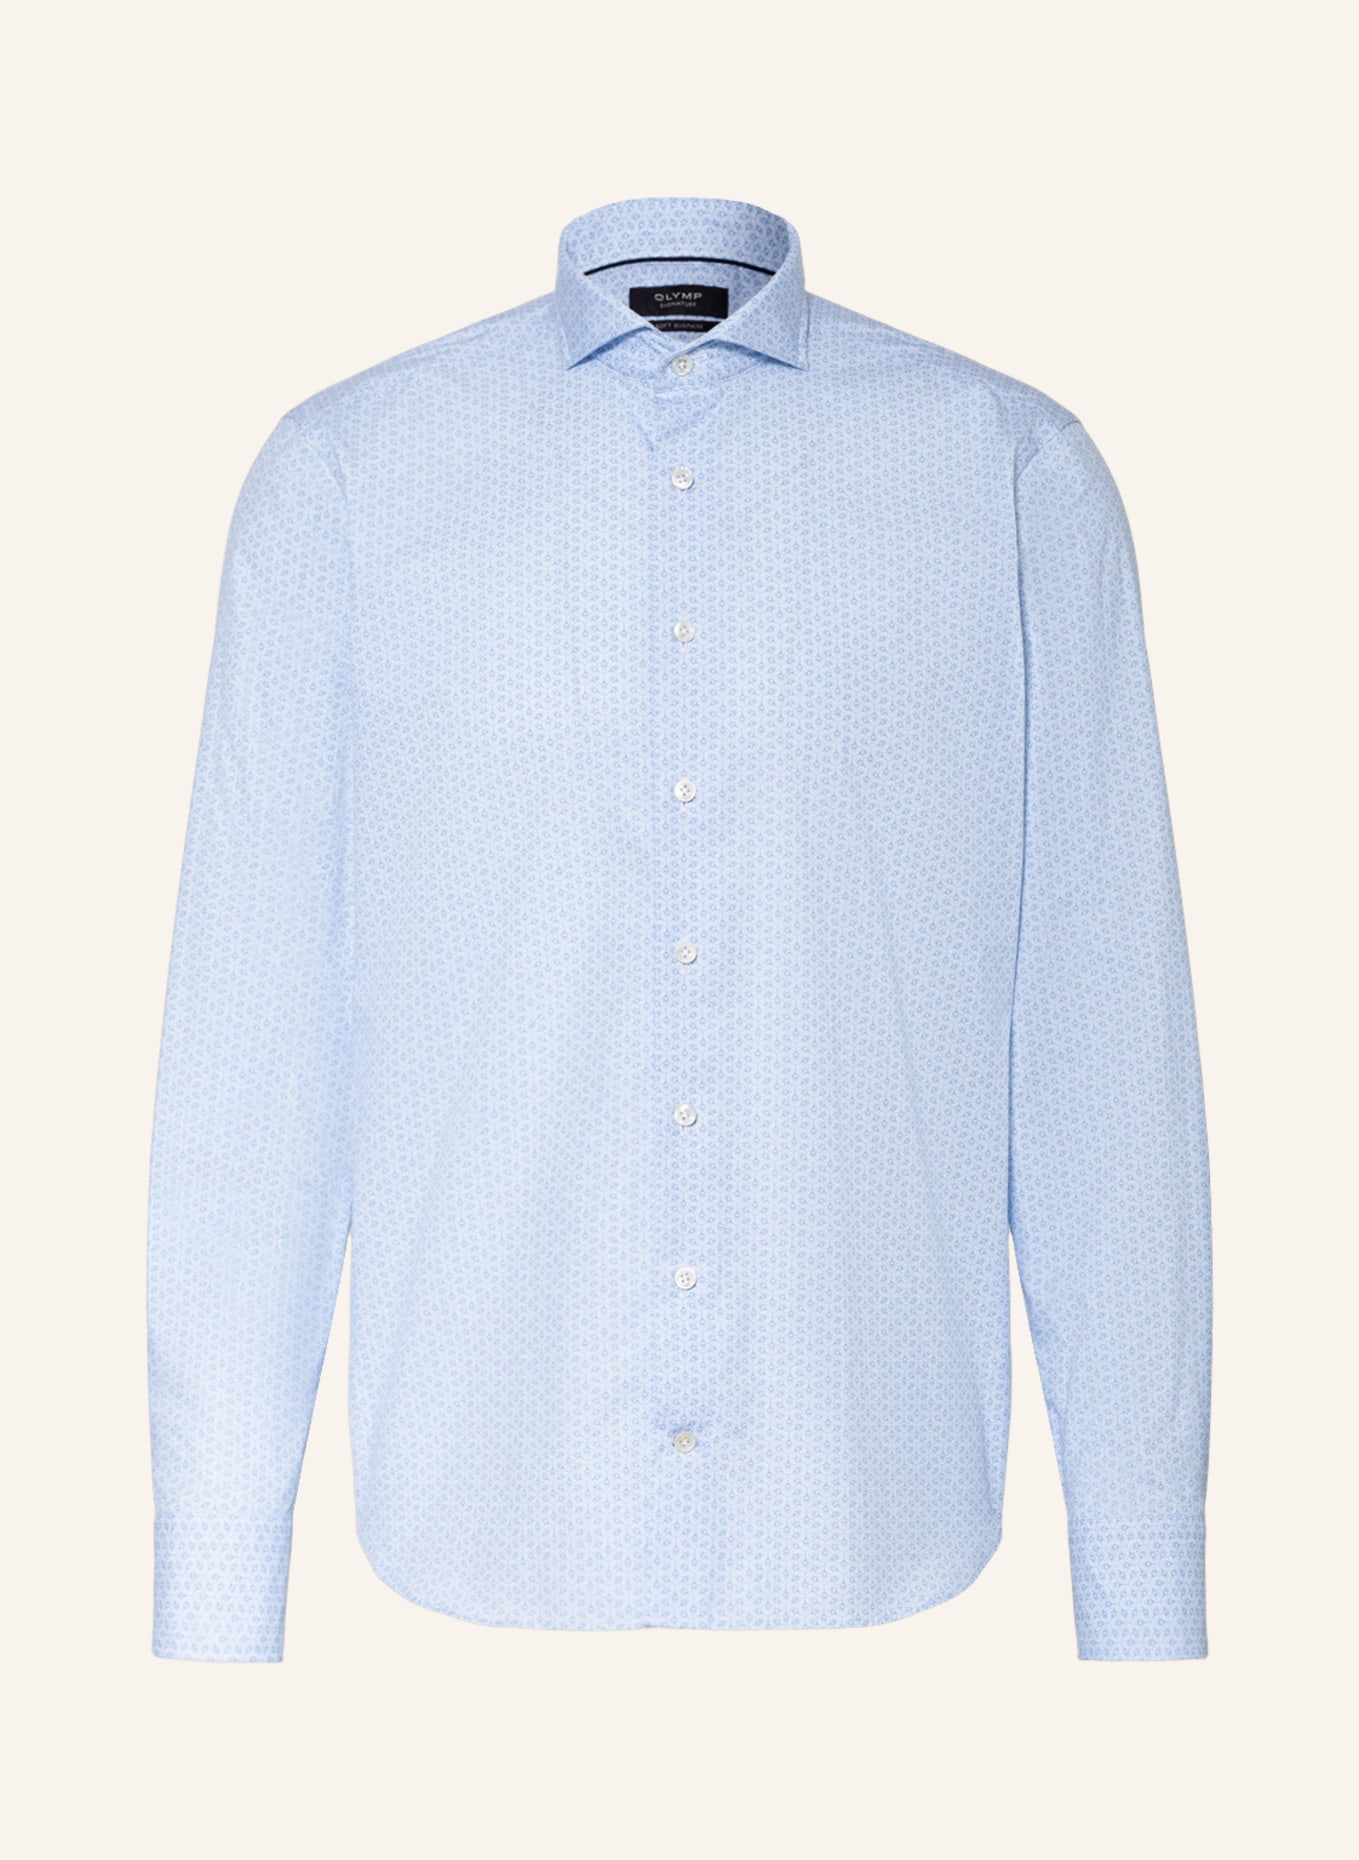 OLYMP SIGNATURE Hemd tailored fit, Farbe: WEISS/ HELLBLAU (Bild 1)